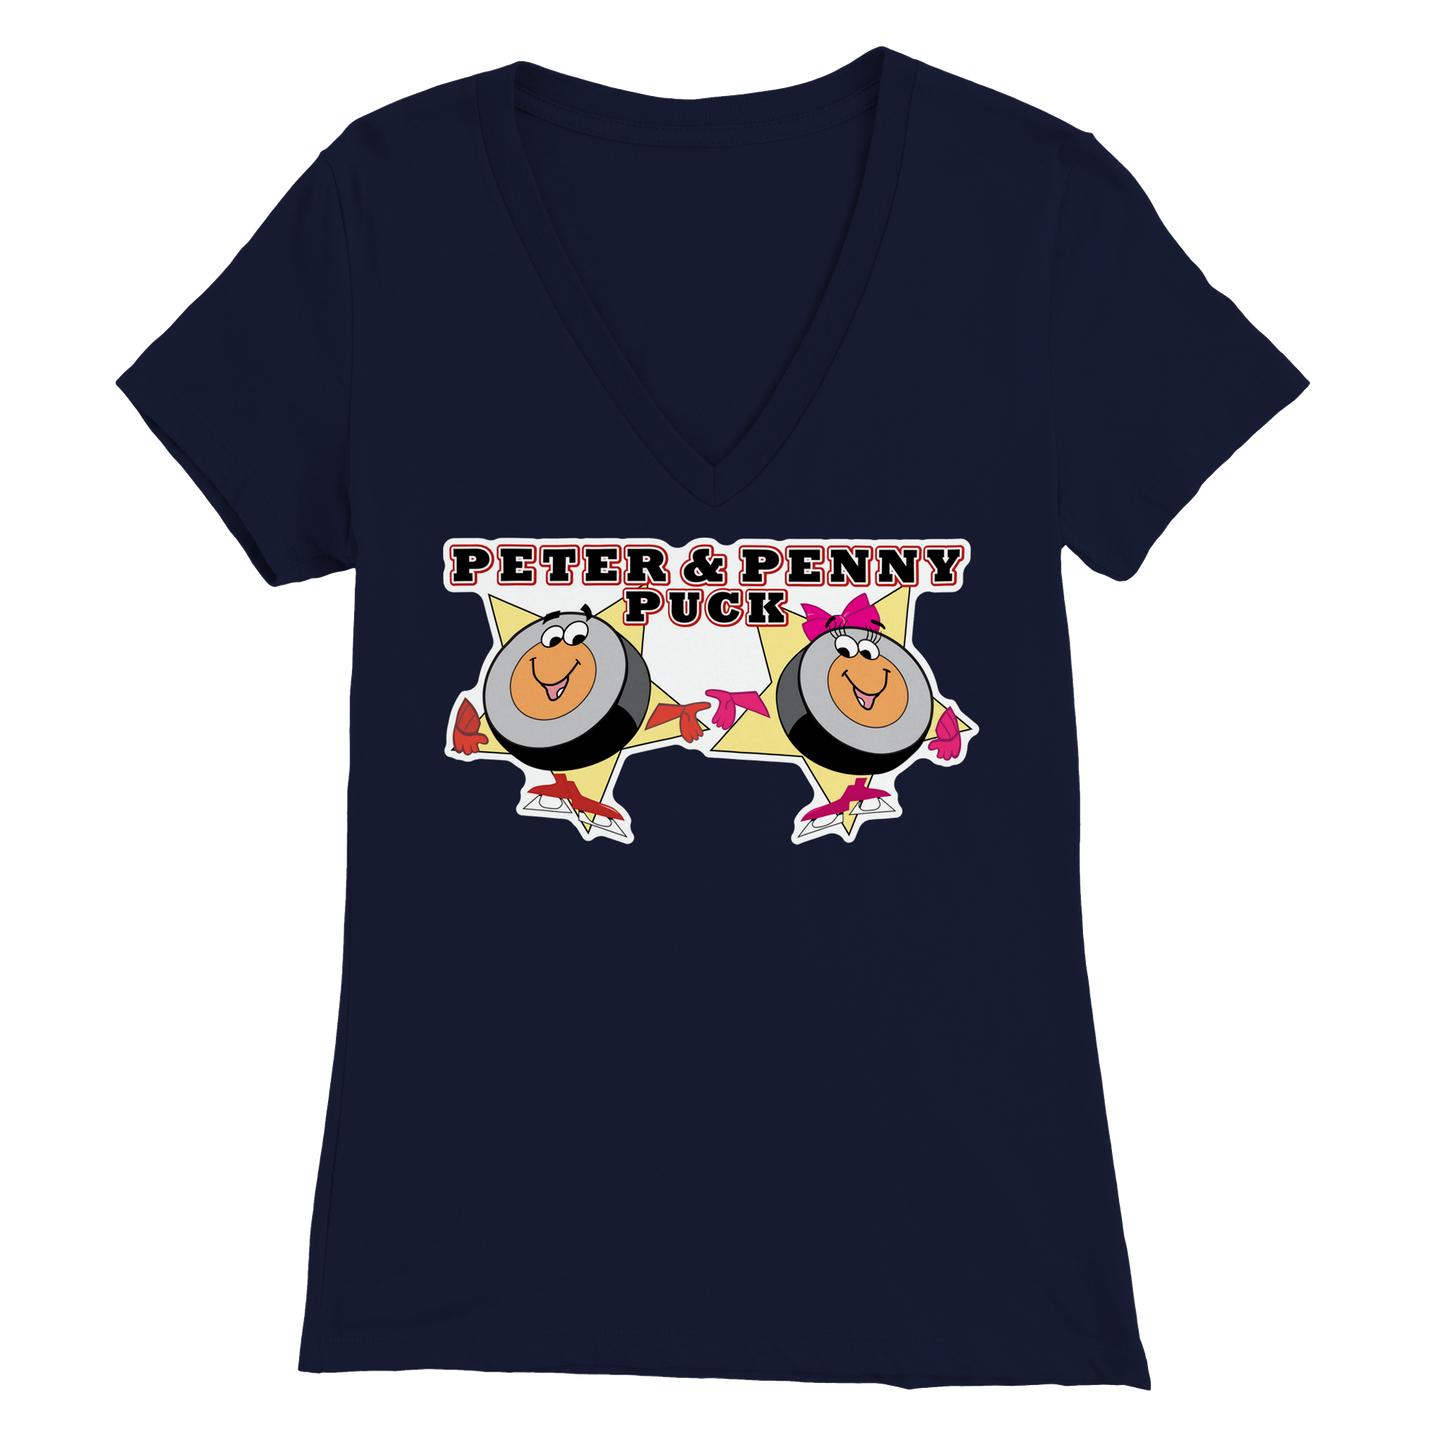 Peter & Penny Vintage Premium Womens V-Neck T-shirt